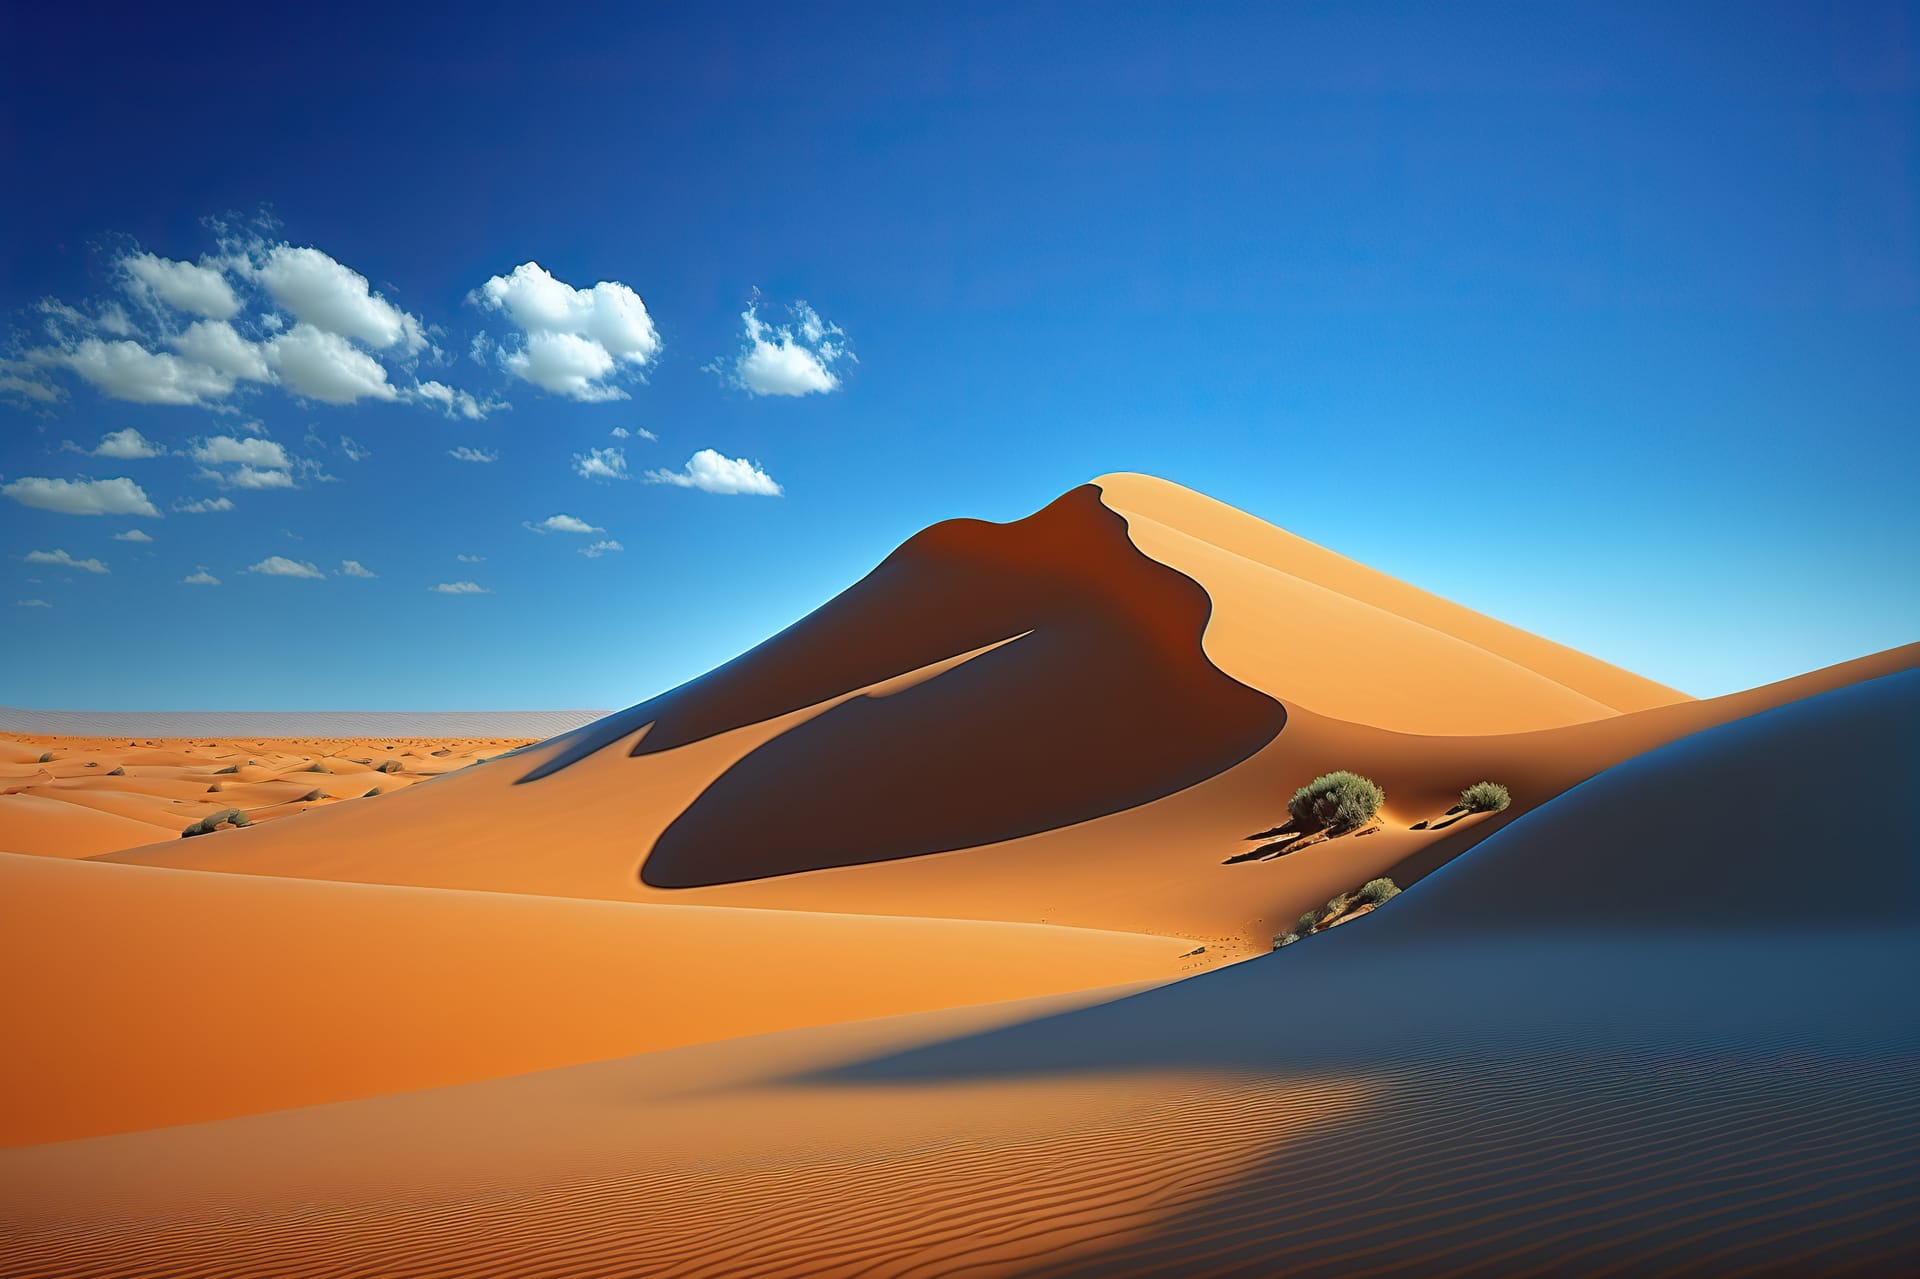 Golden sand dunes blue sky beautiful desert landscape image